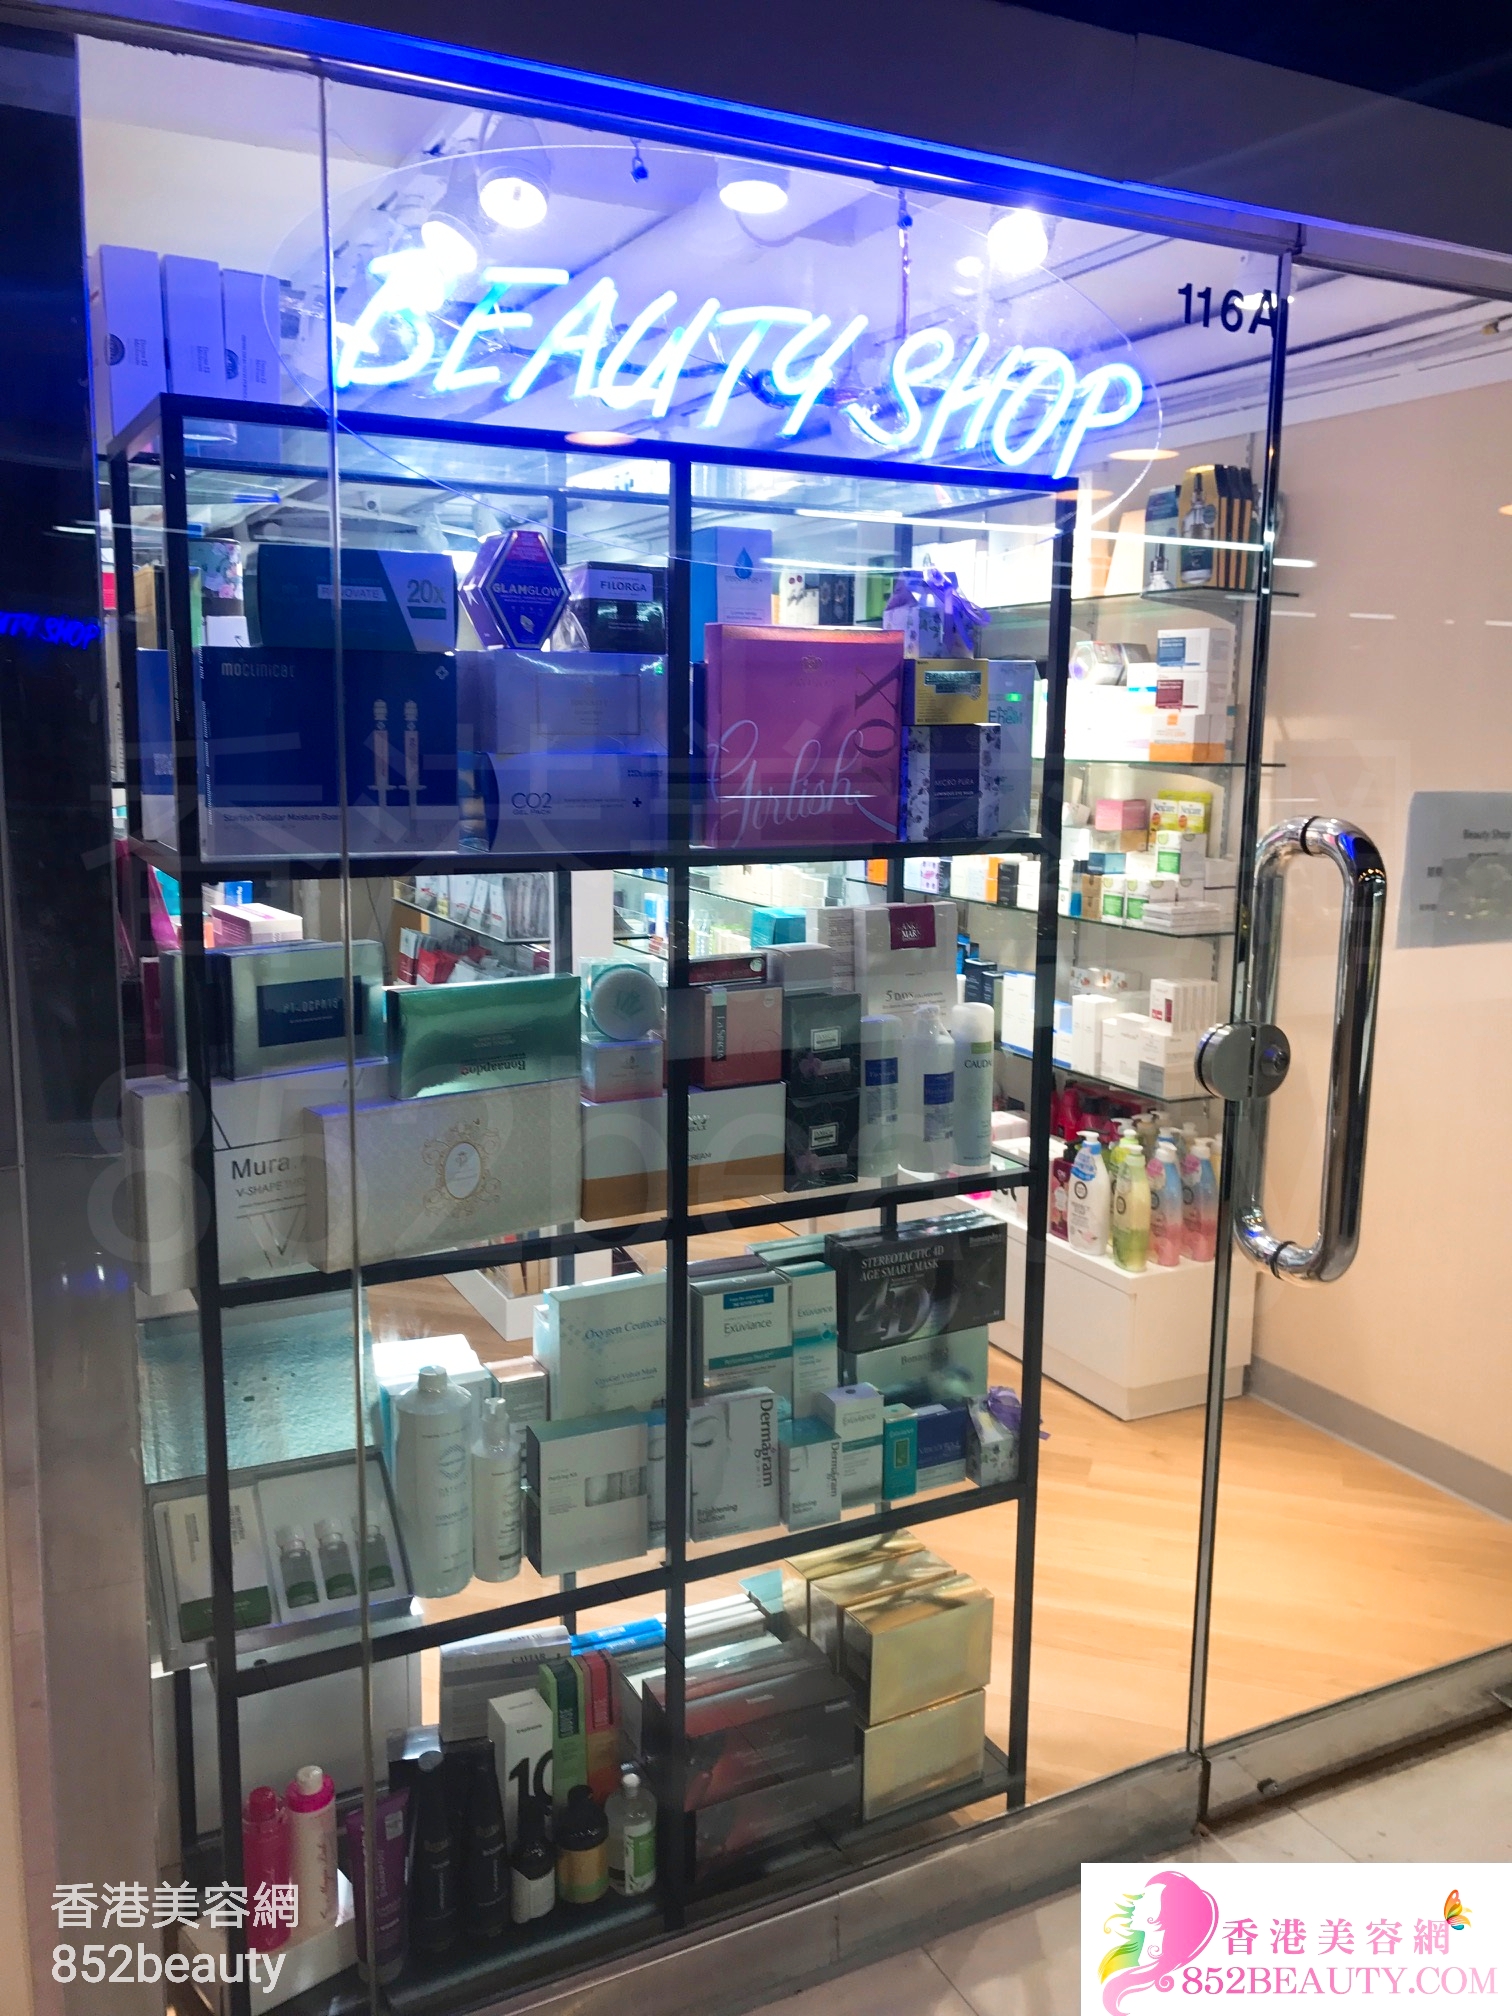 Facial Care: Beauty Shop